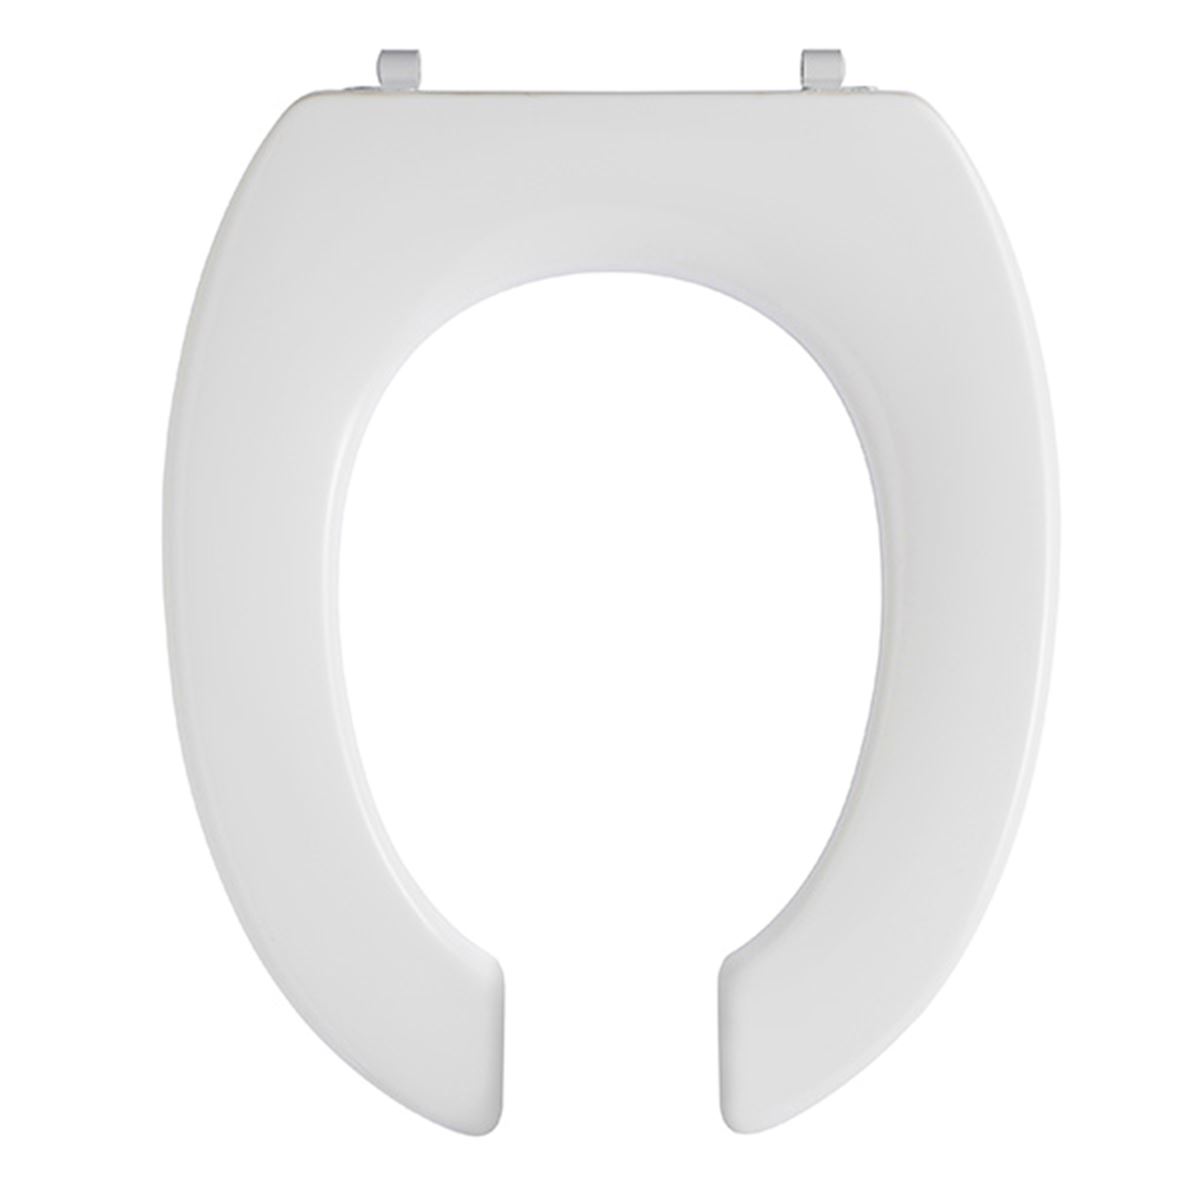 Anthracite Crown Sticker for Pressalit Toilet Seat 